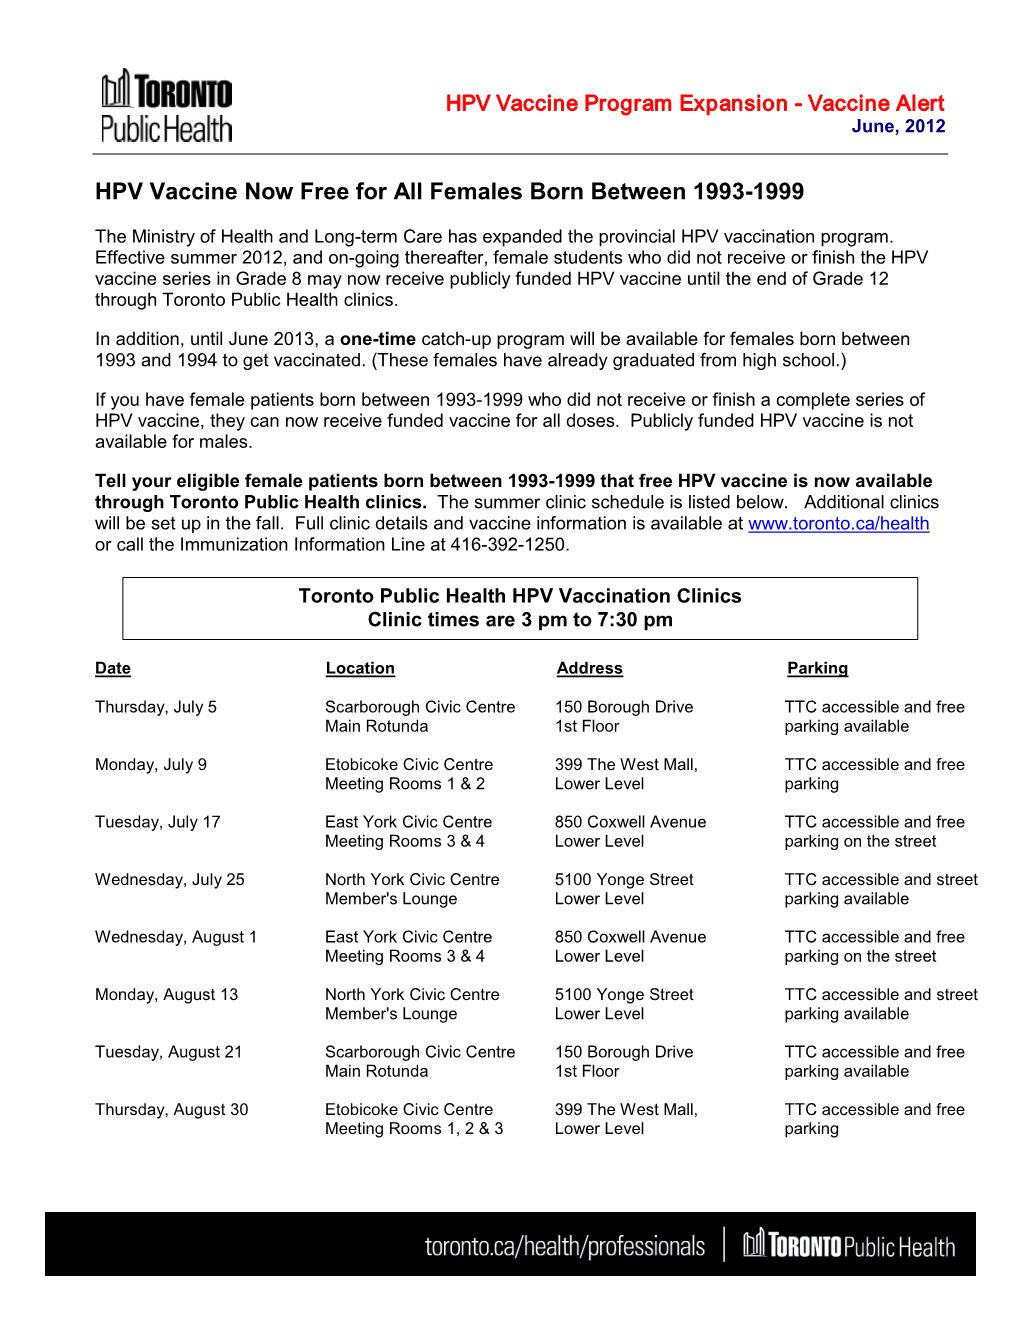 HPV Vaccine Alert